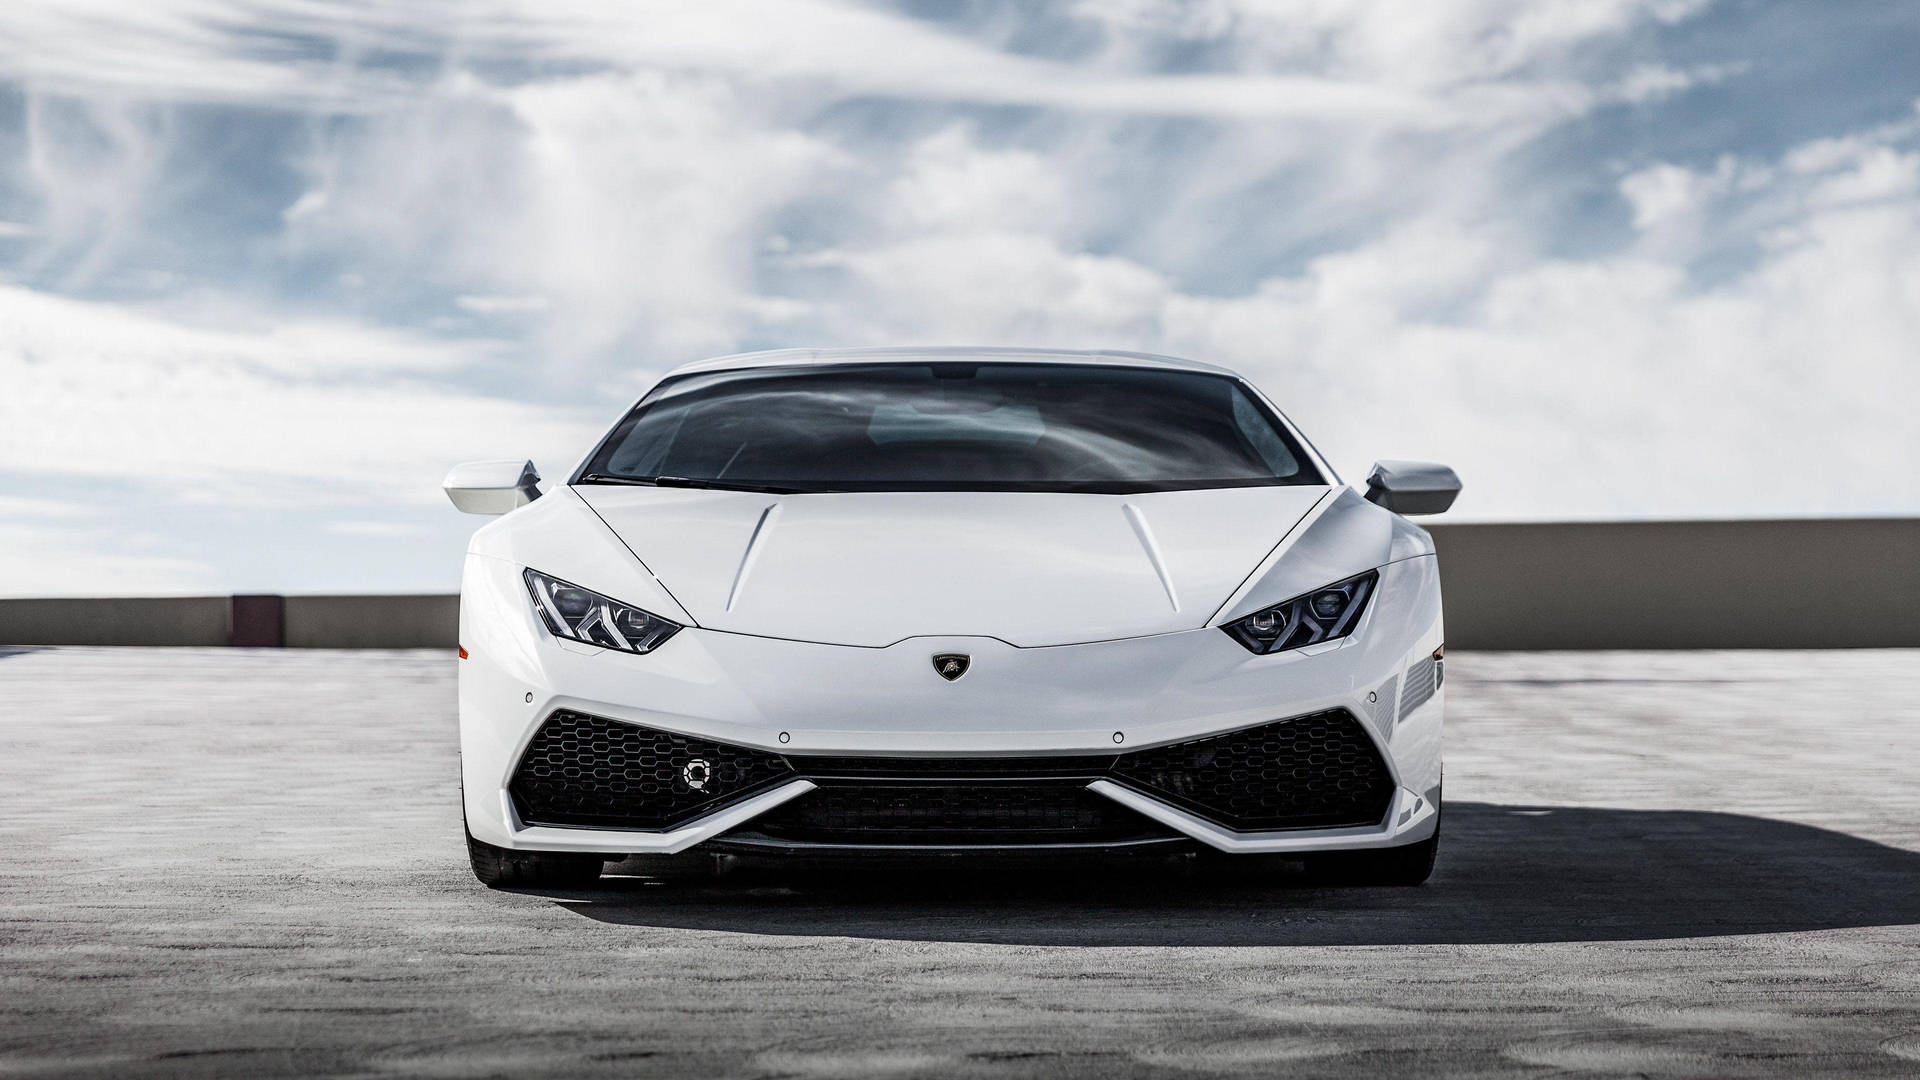 Cool Cars: White Slim Lamborghini Wallpaper